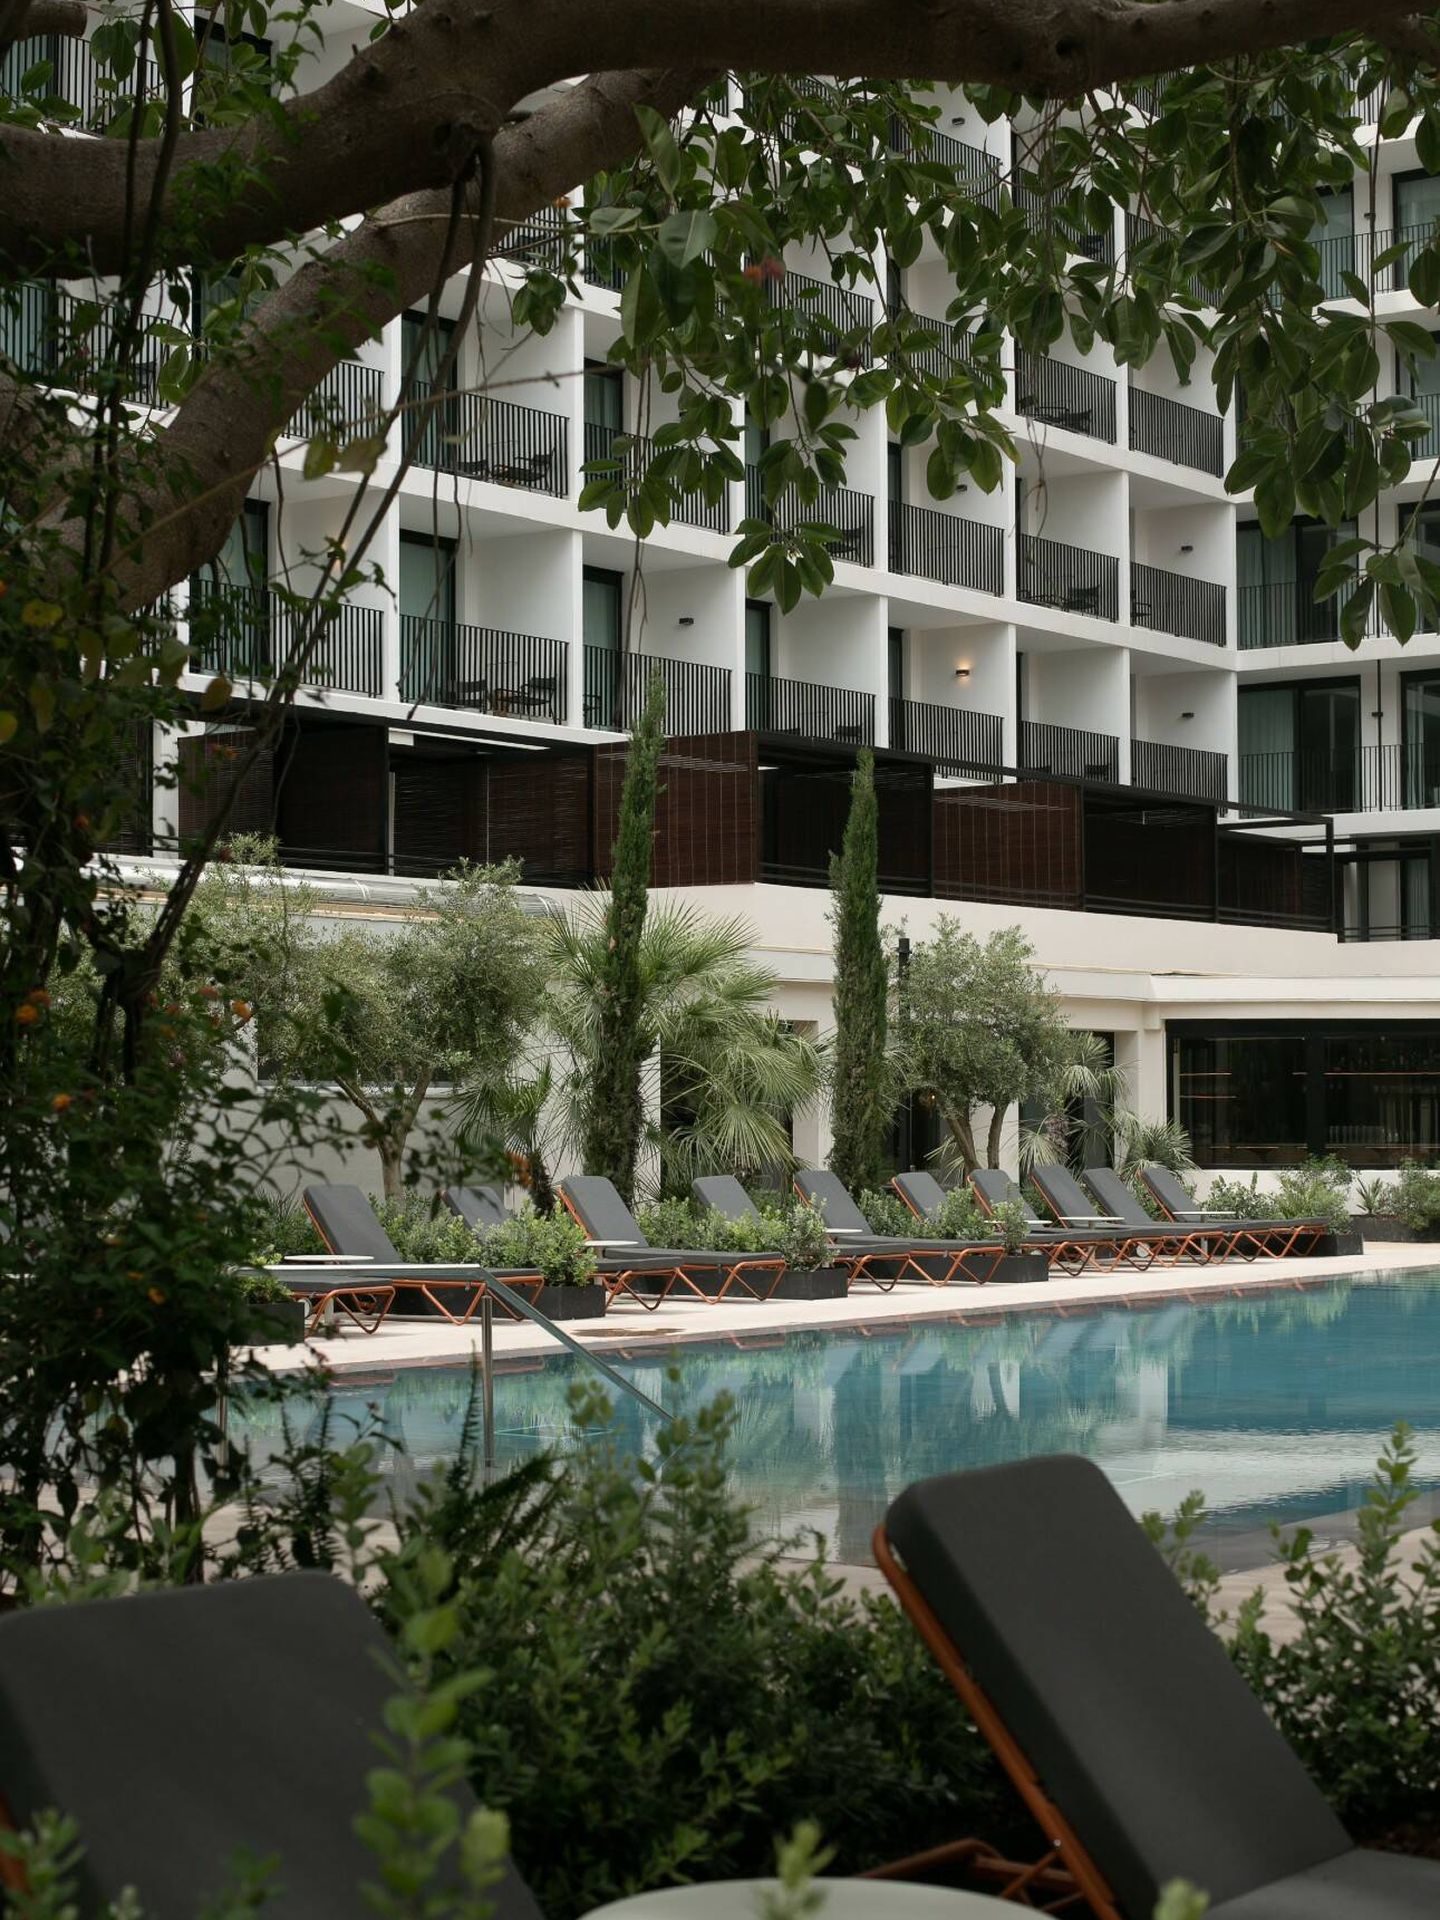 Vista de la piscina del Hotel Mercure Benidorm. (Cedida)